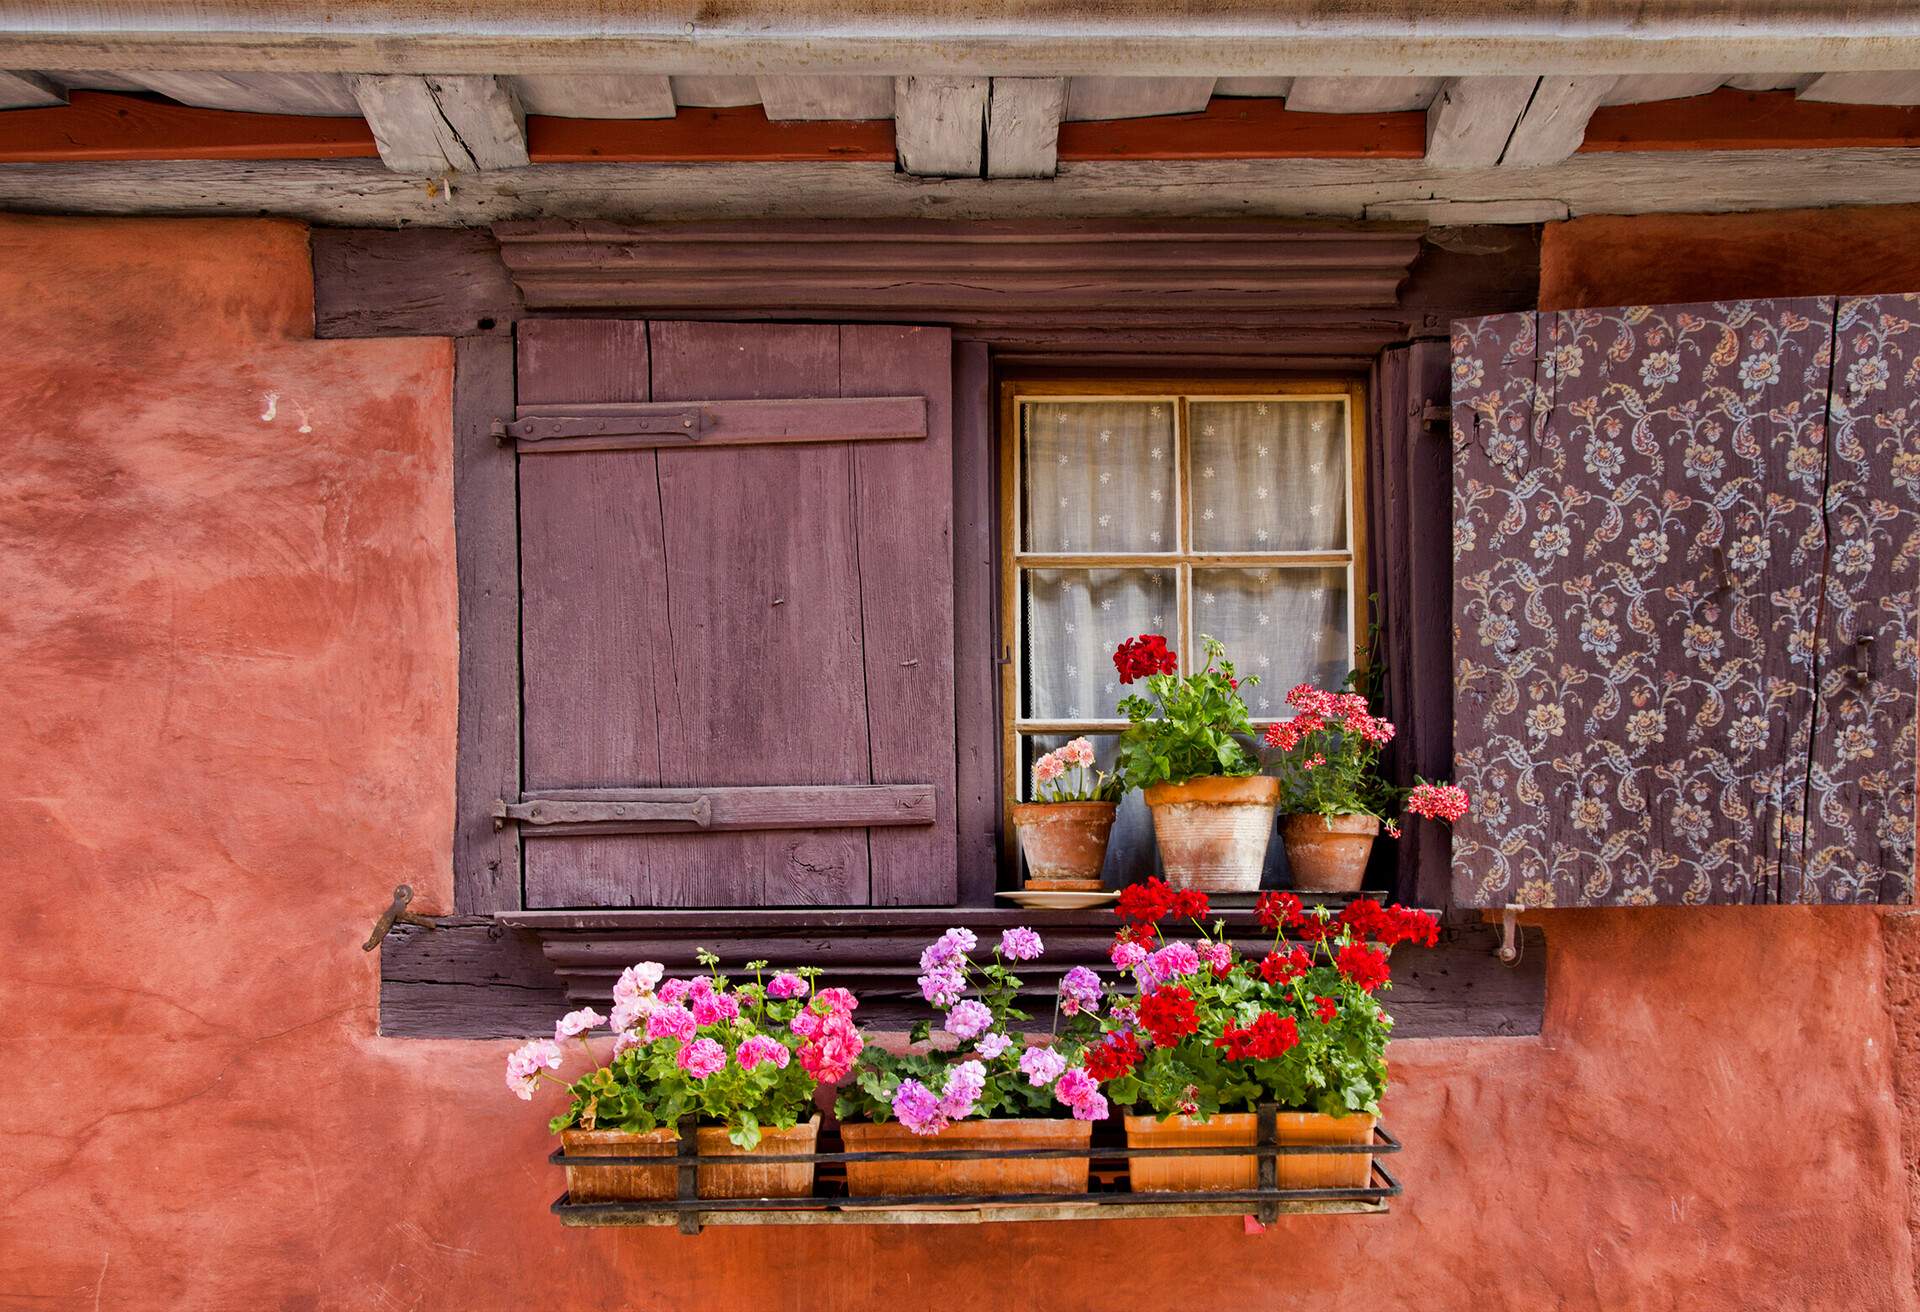 Pottery in a window in Alsace 